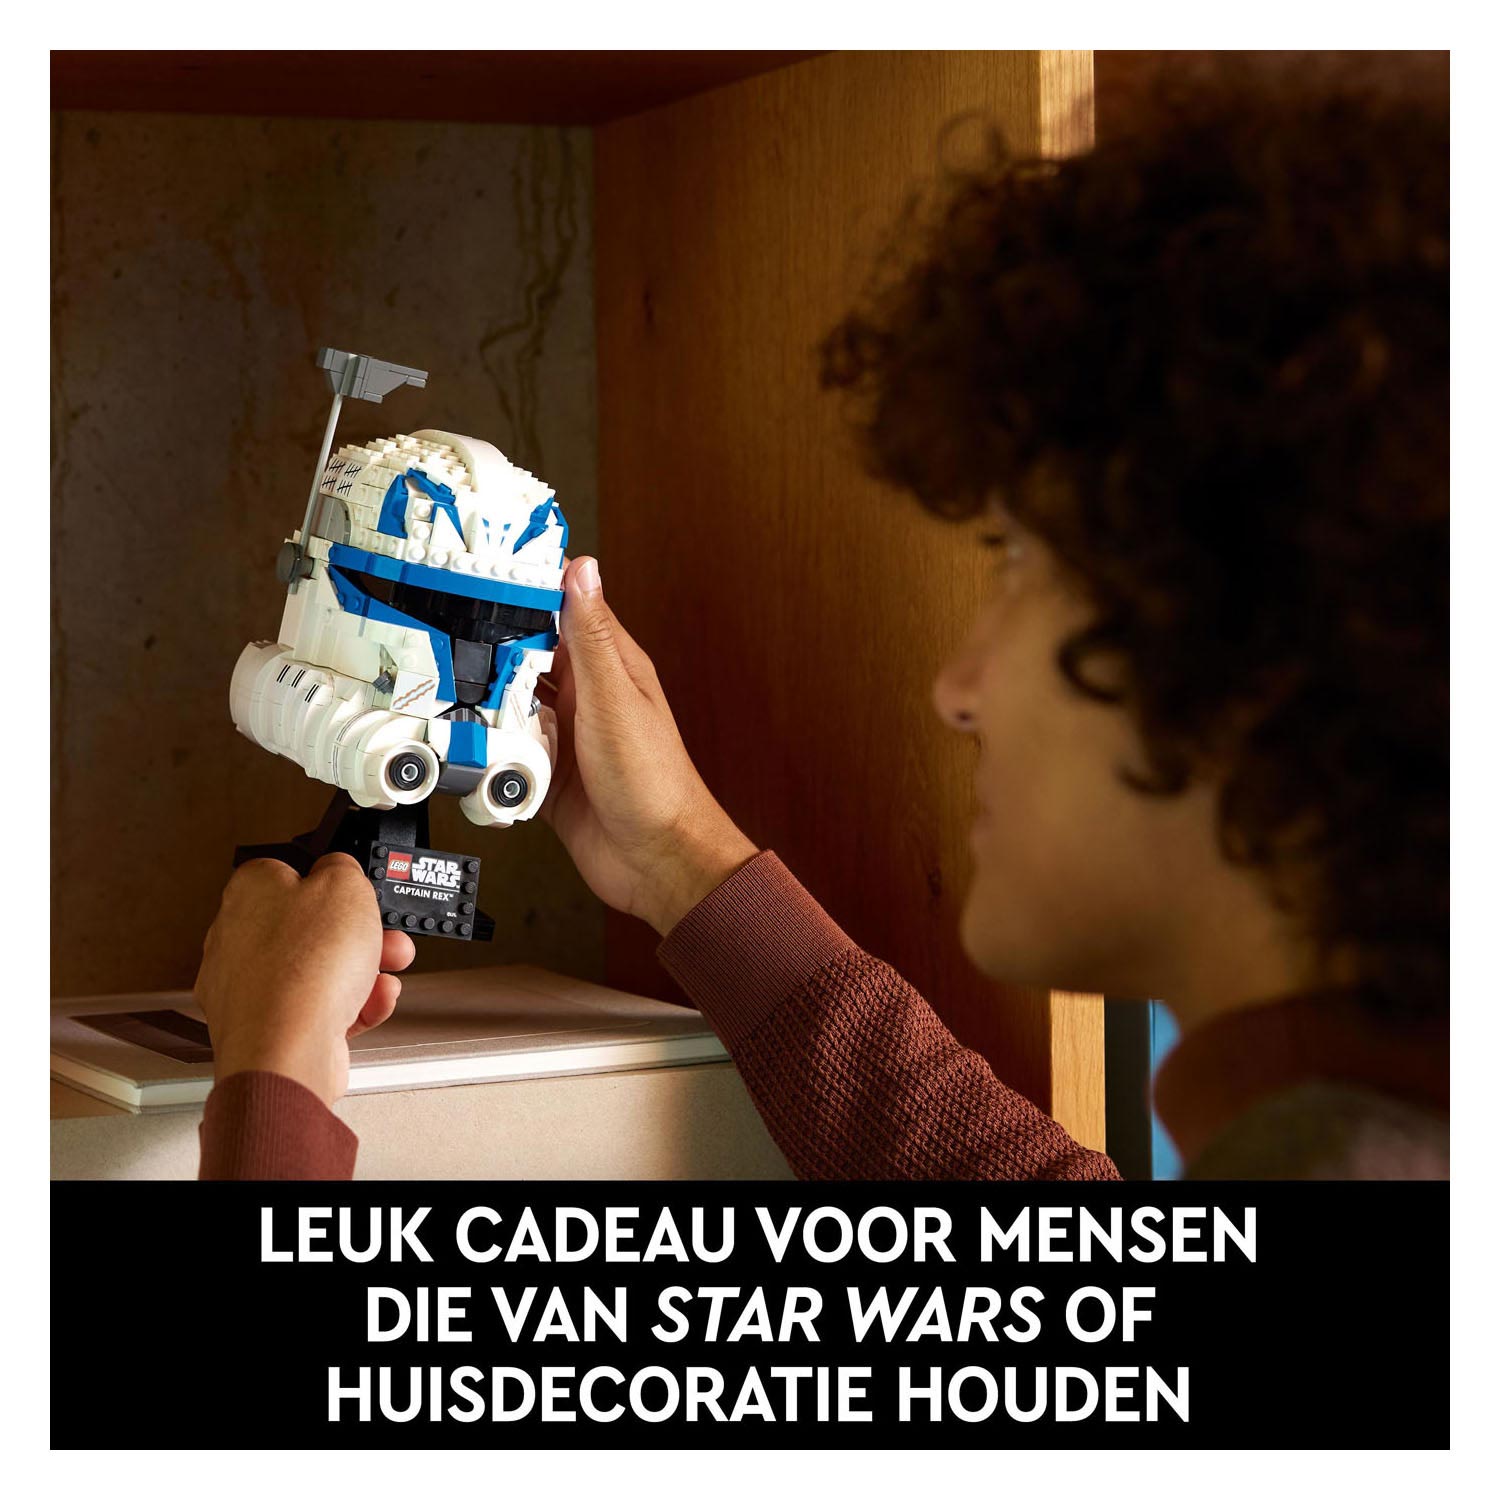 LEGO Star Wars 75349 Capitain Rex Helm Model Set